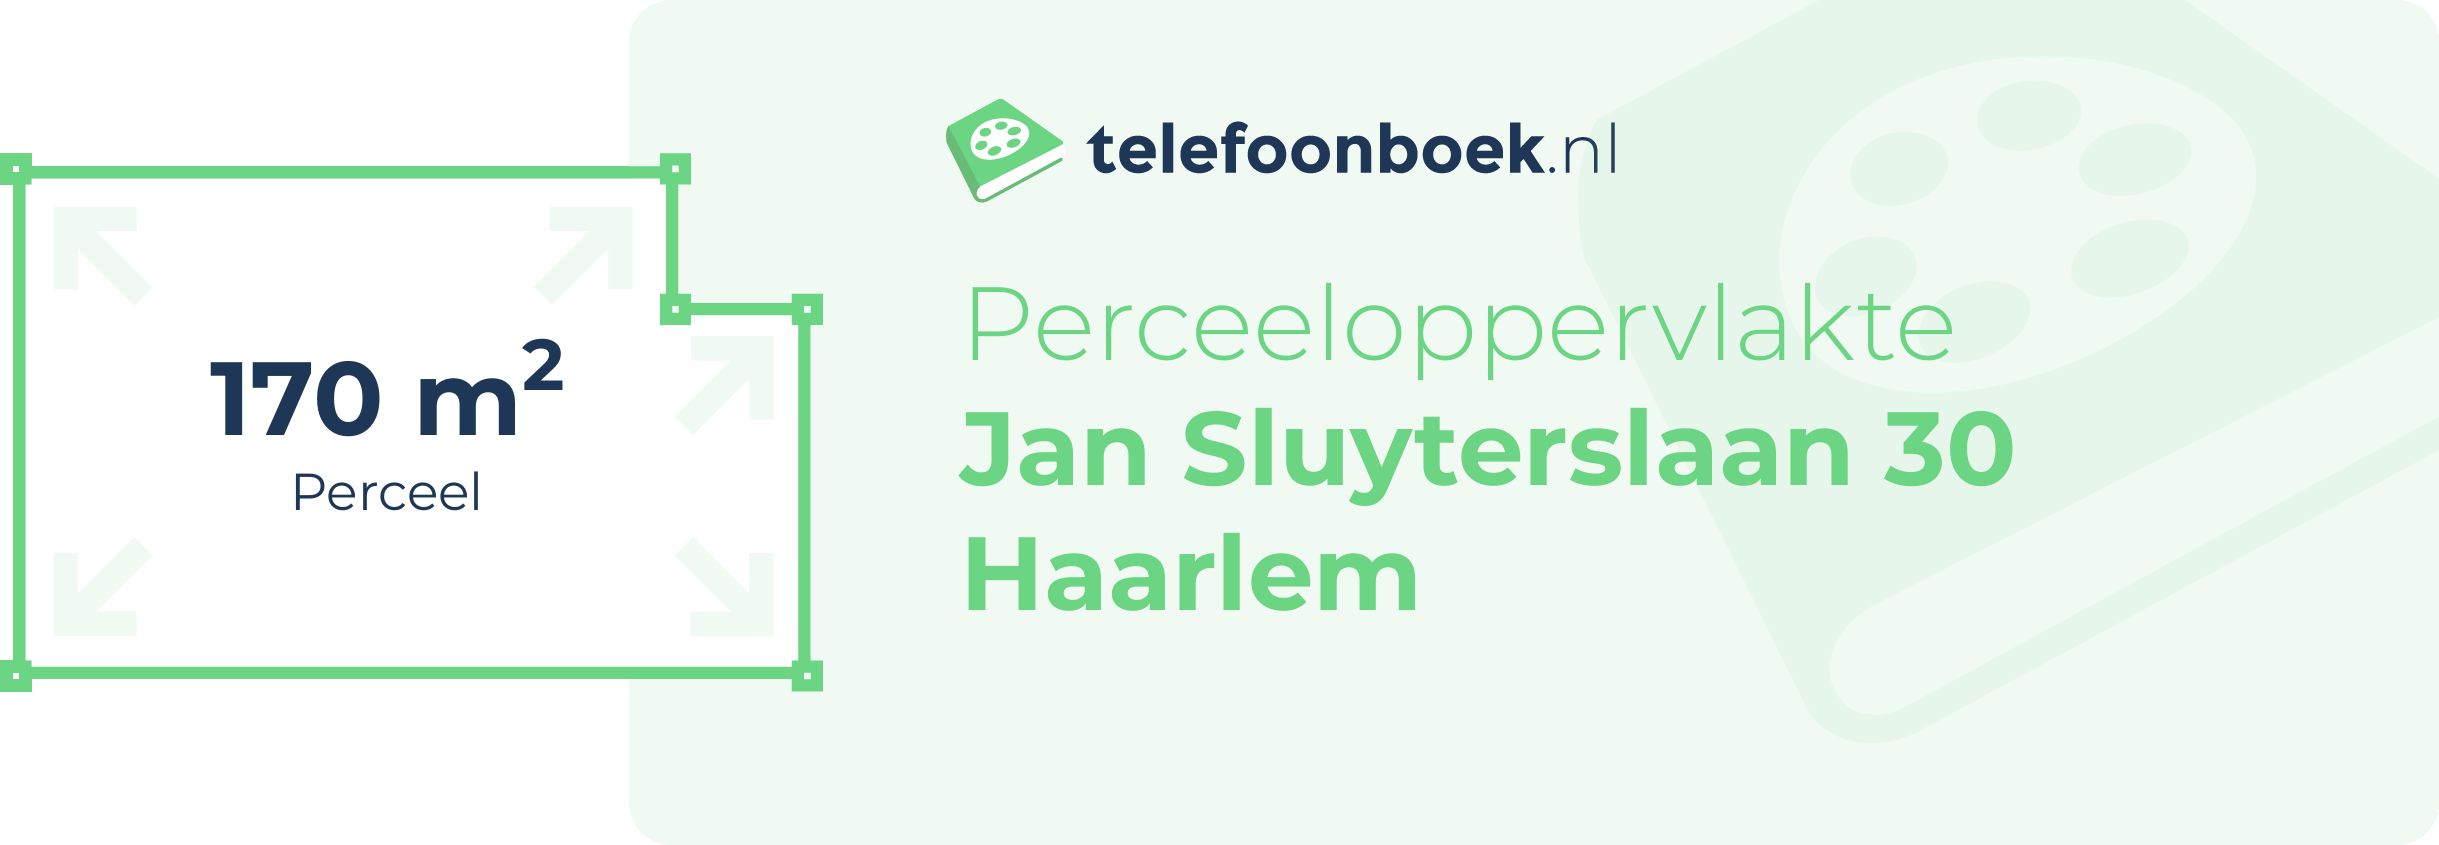 Perceeloppervlakte Jan Sluyterslaan 30 Haarlem